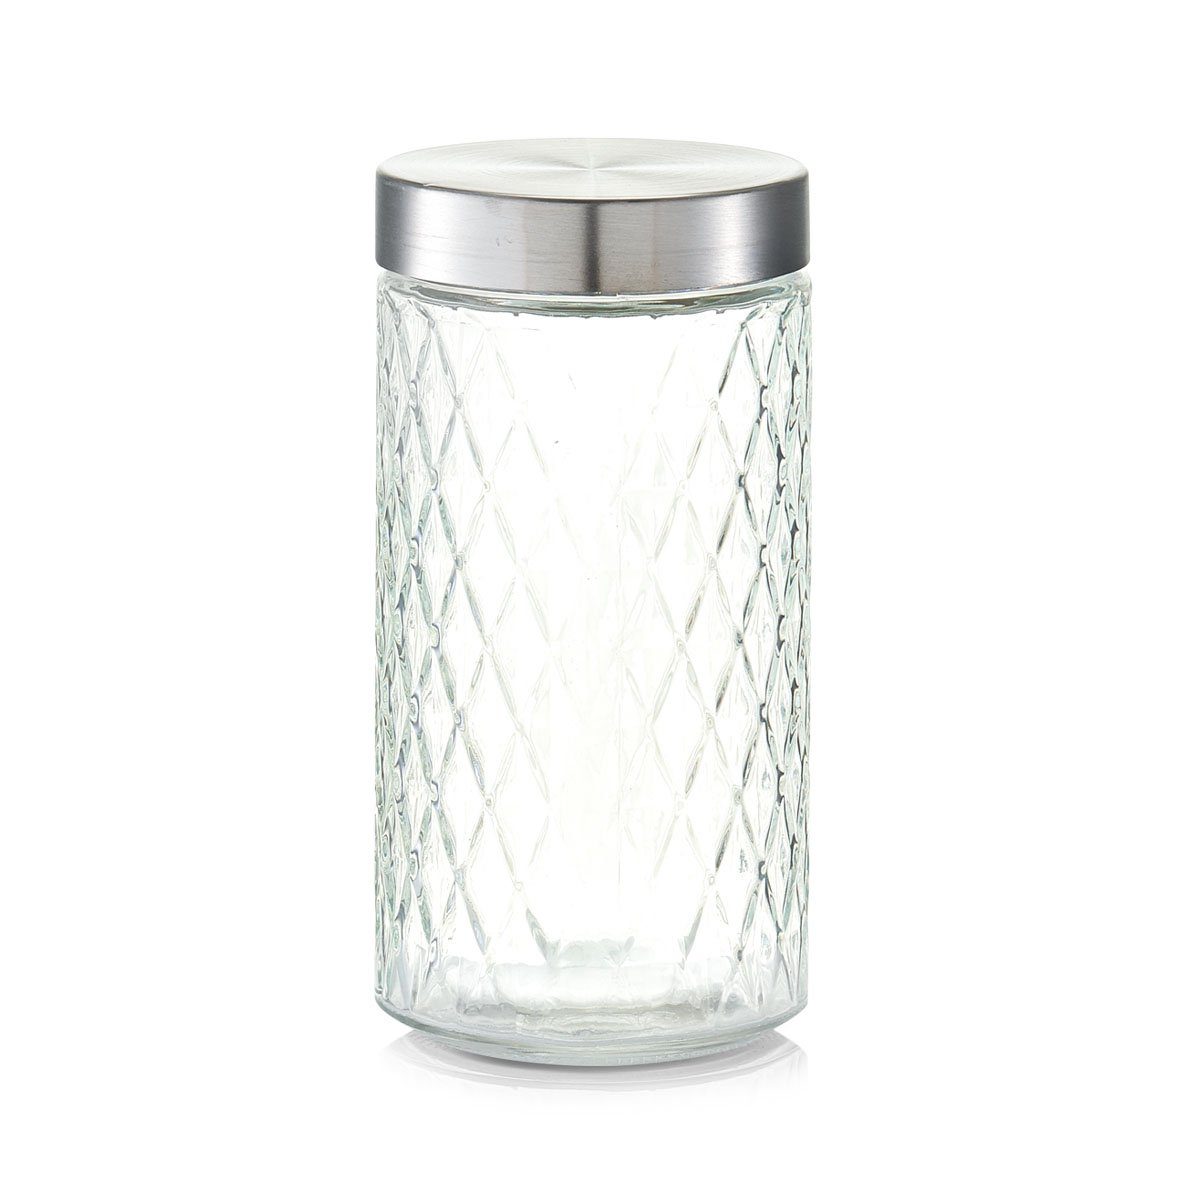 Zeller Present Vorratsglas Vorratsglas "Raute" m. Metalldeckel, Glas/Metall, 1500 ml, Glas/Metall, transparent, Ø11 x 22 cm